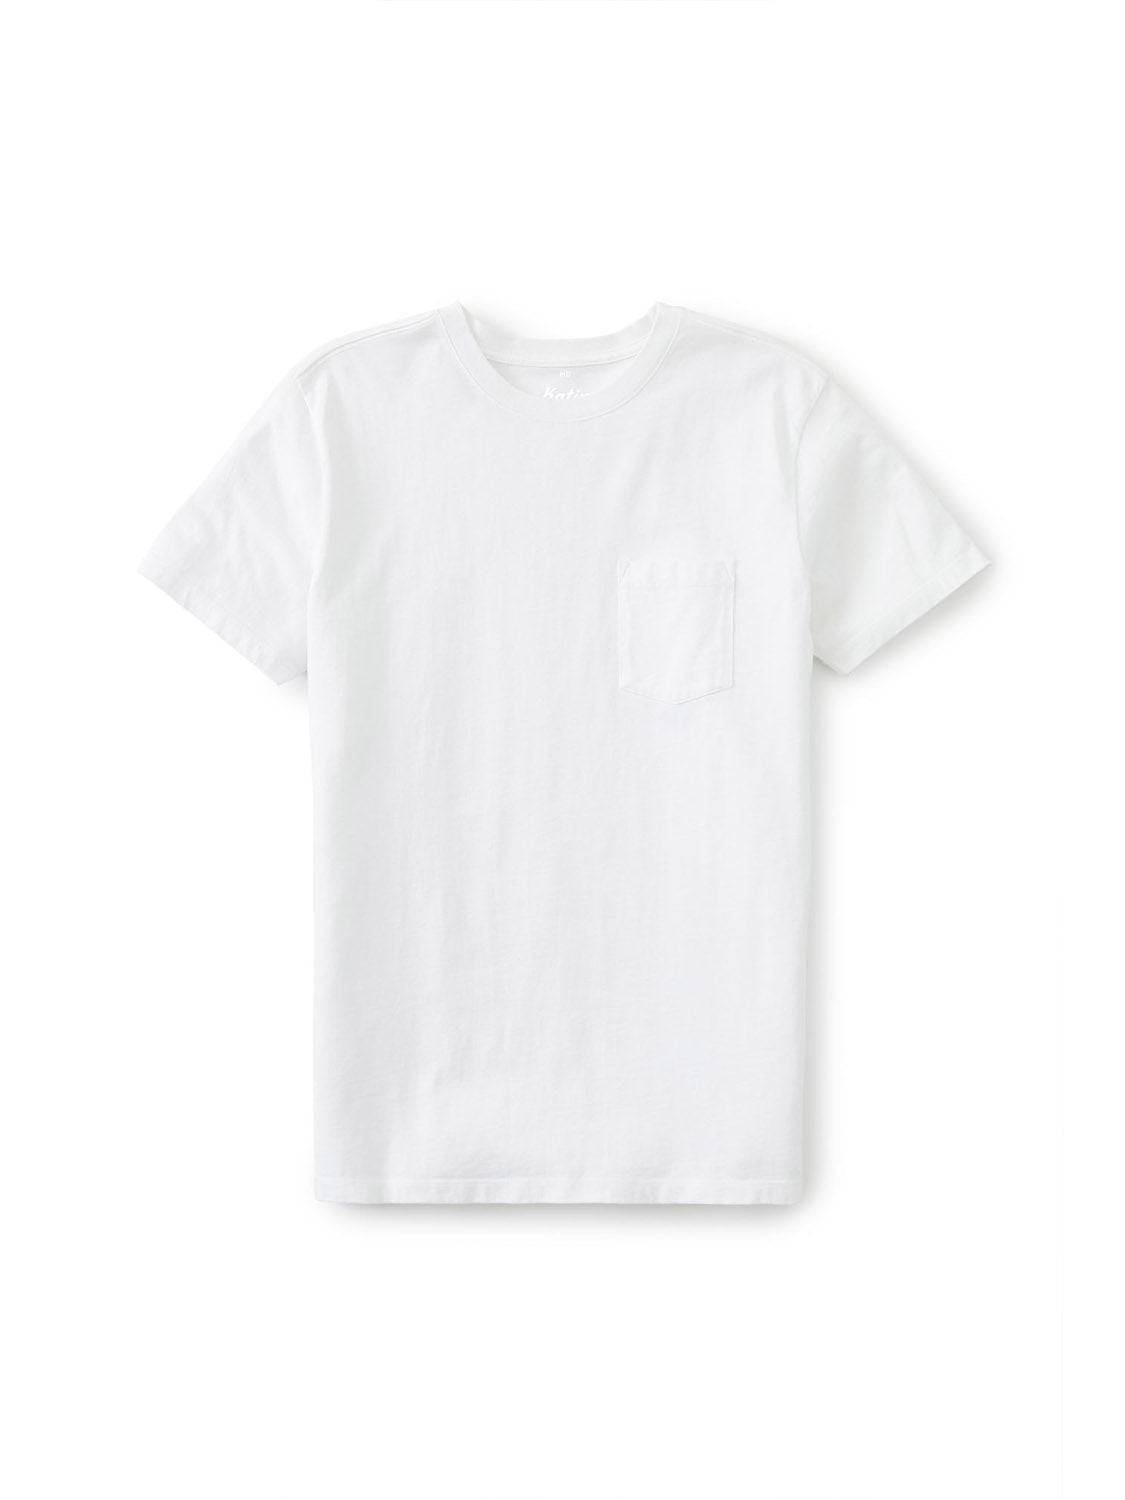 Katin Base T-Shirt